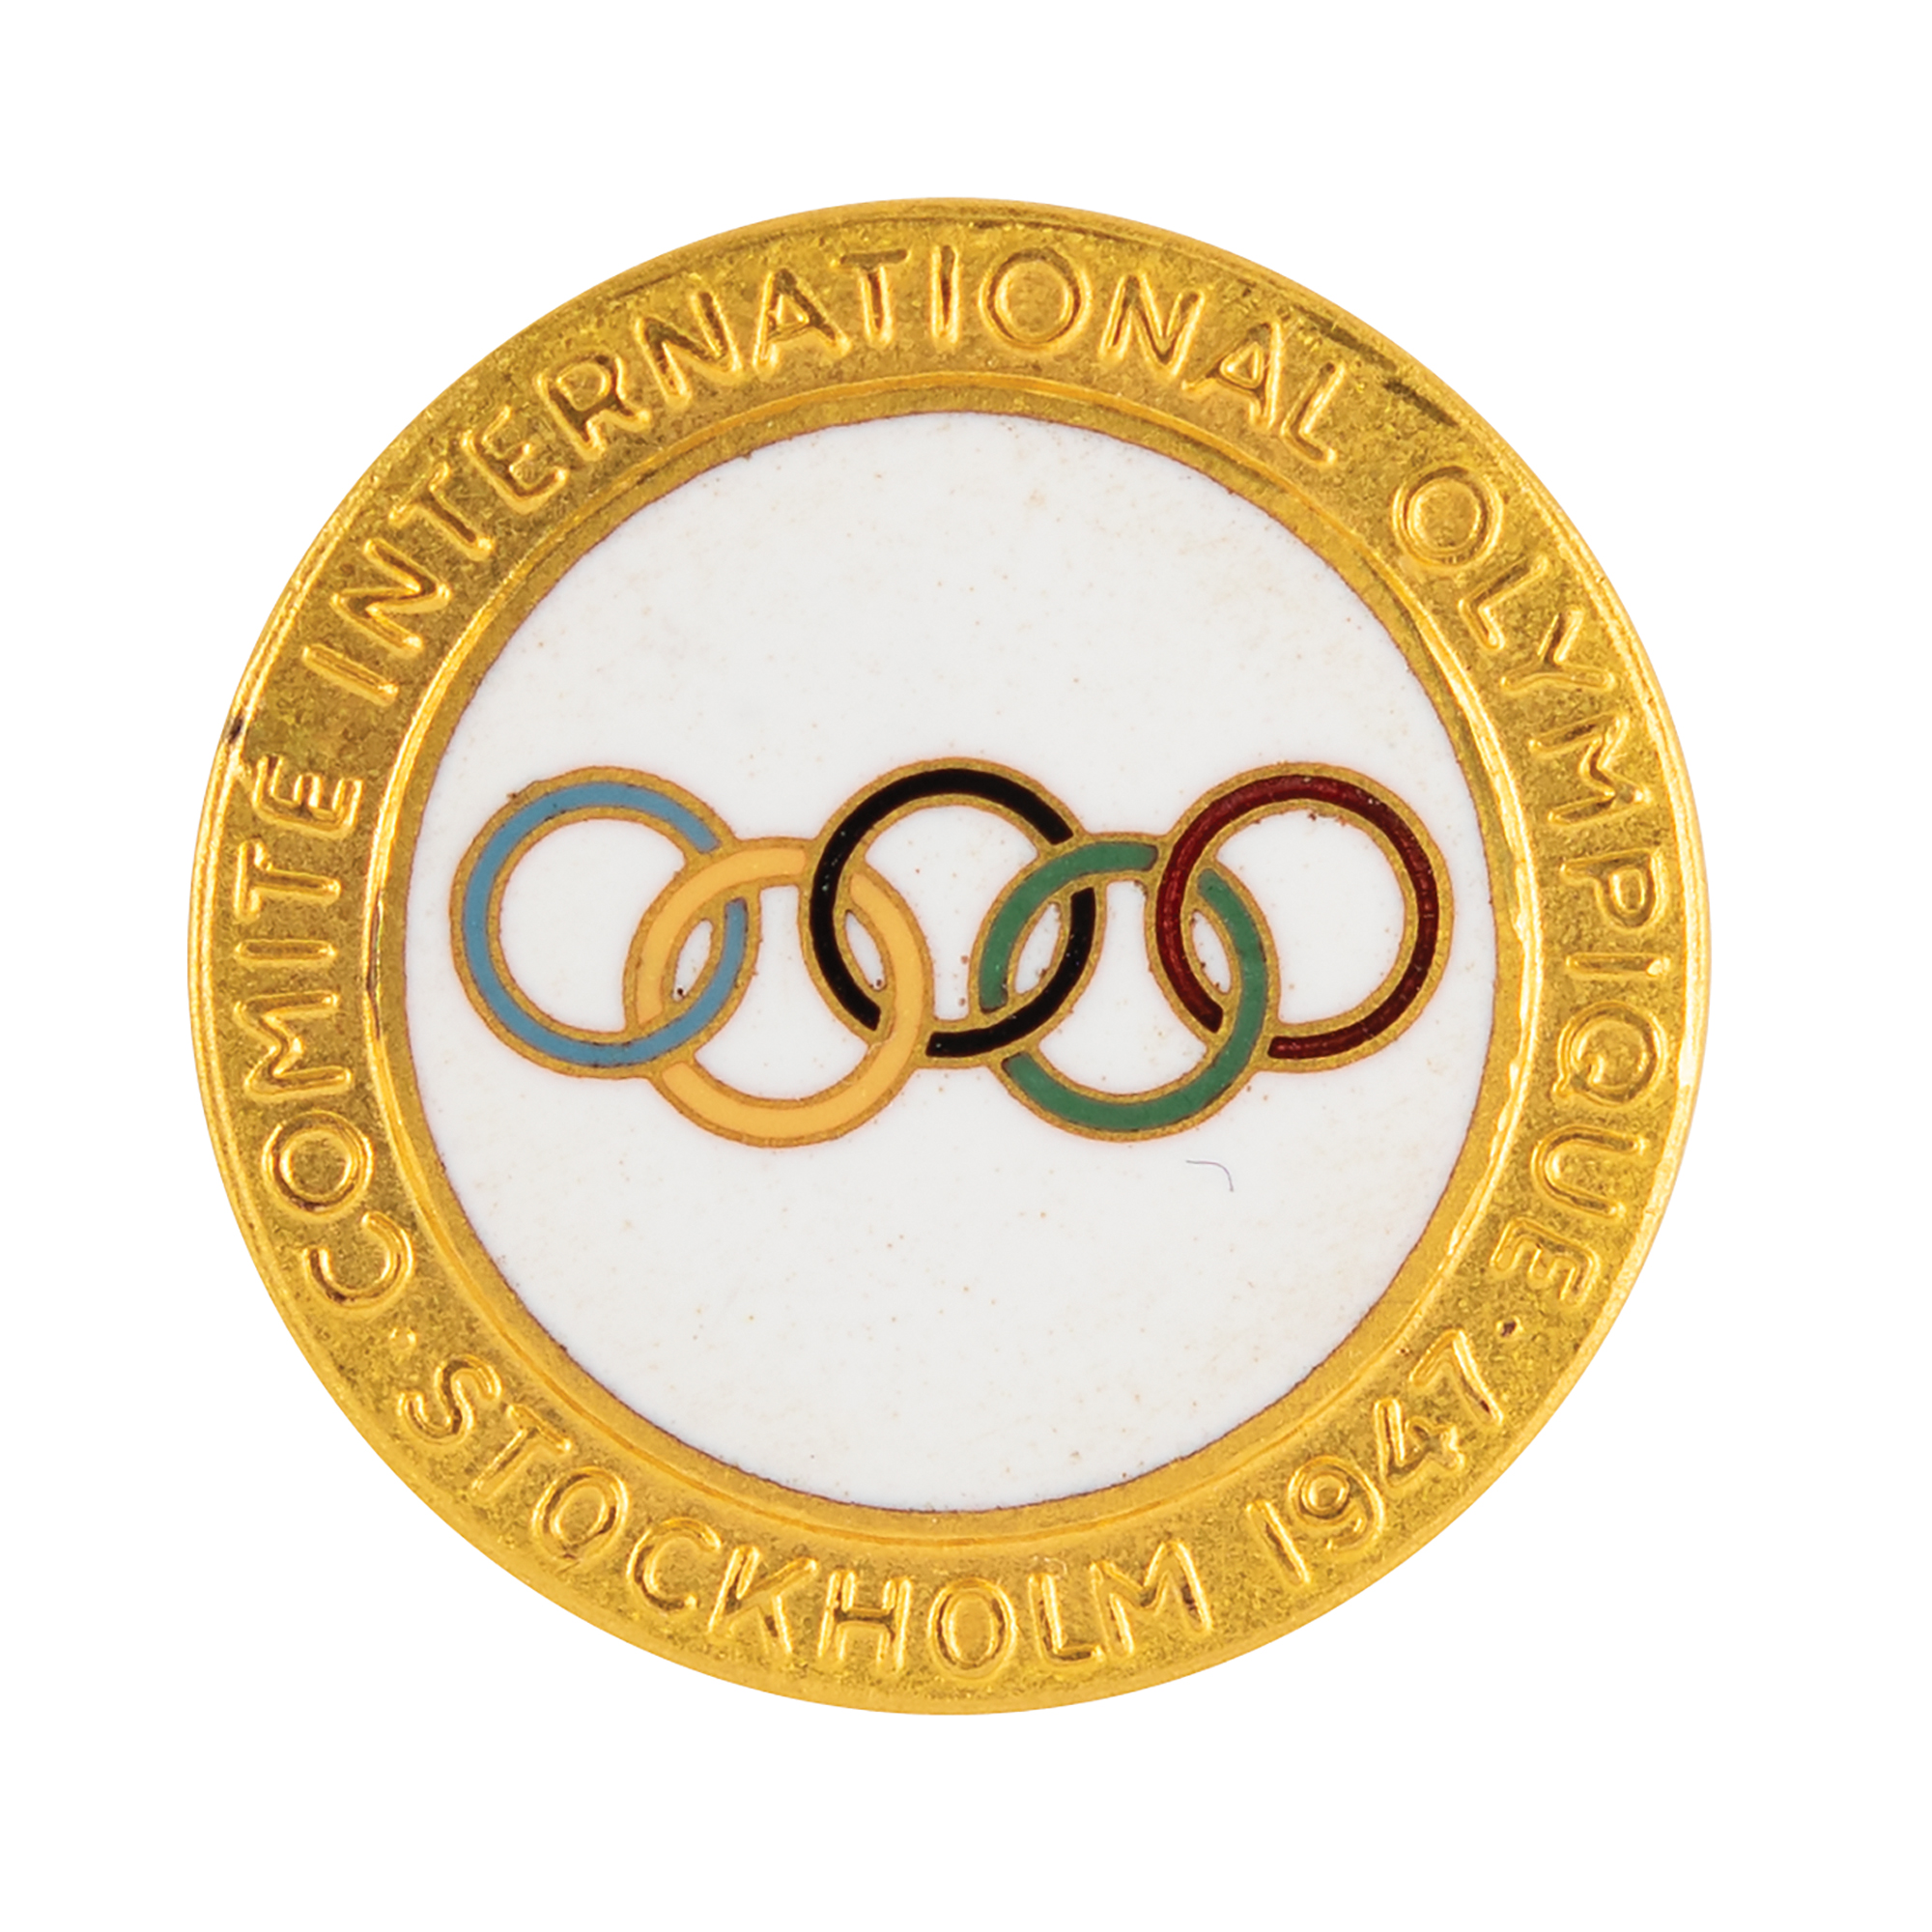 Lot #4126 Stockholm 1947 IOC Session Badge